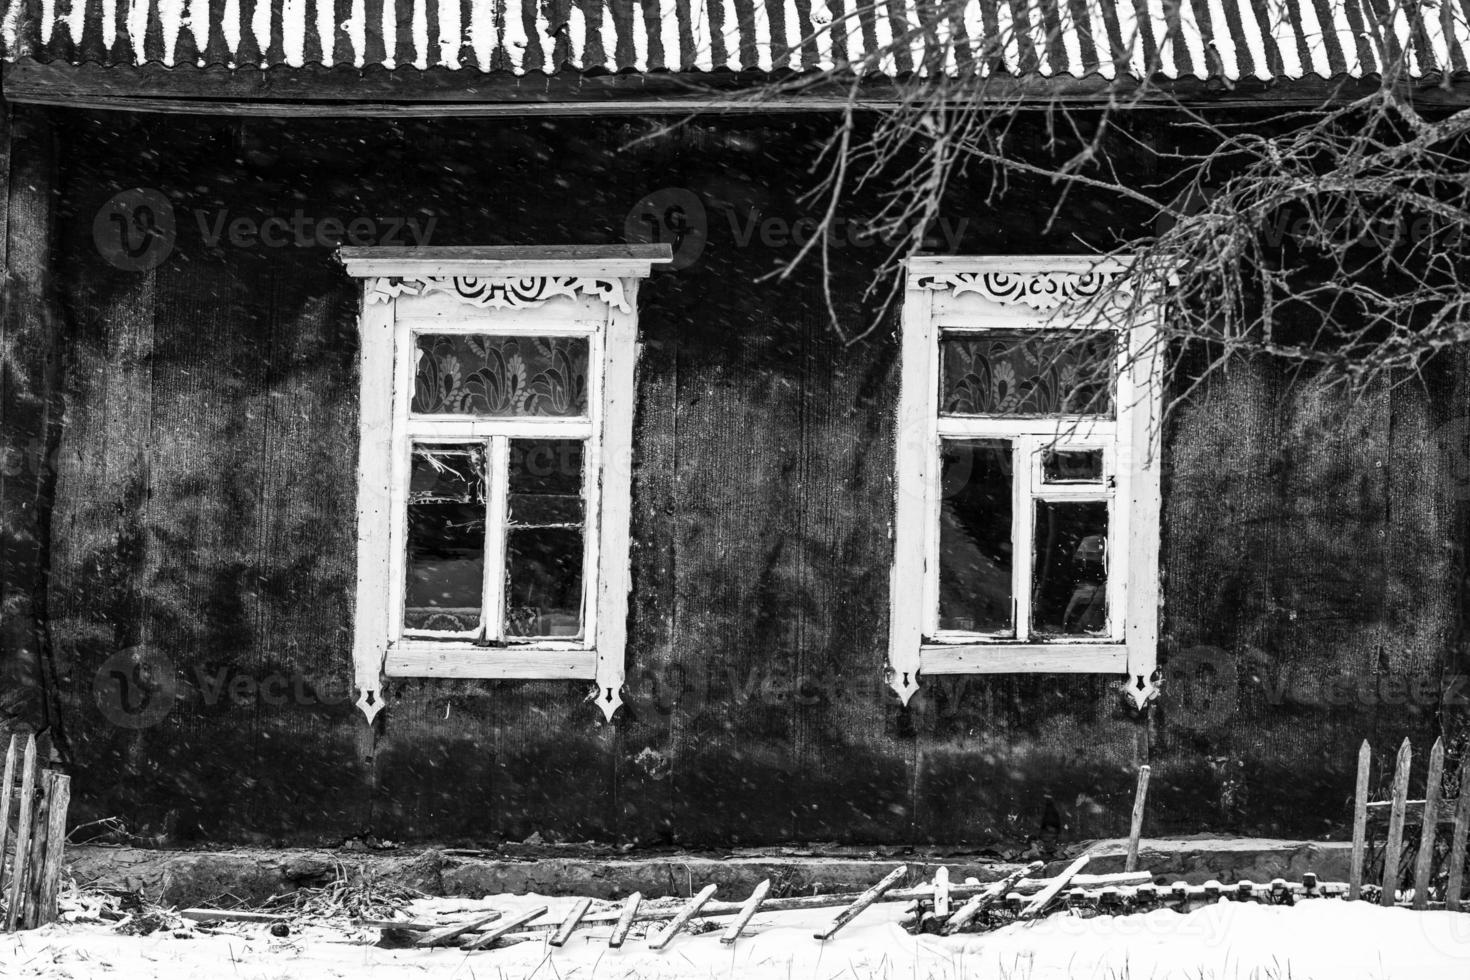 Lets landelijk dorp landschap in latgale in winter foto